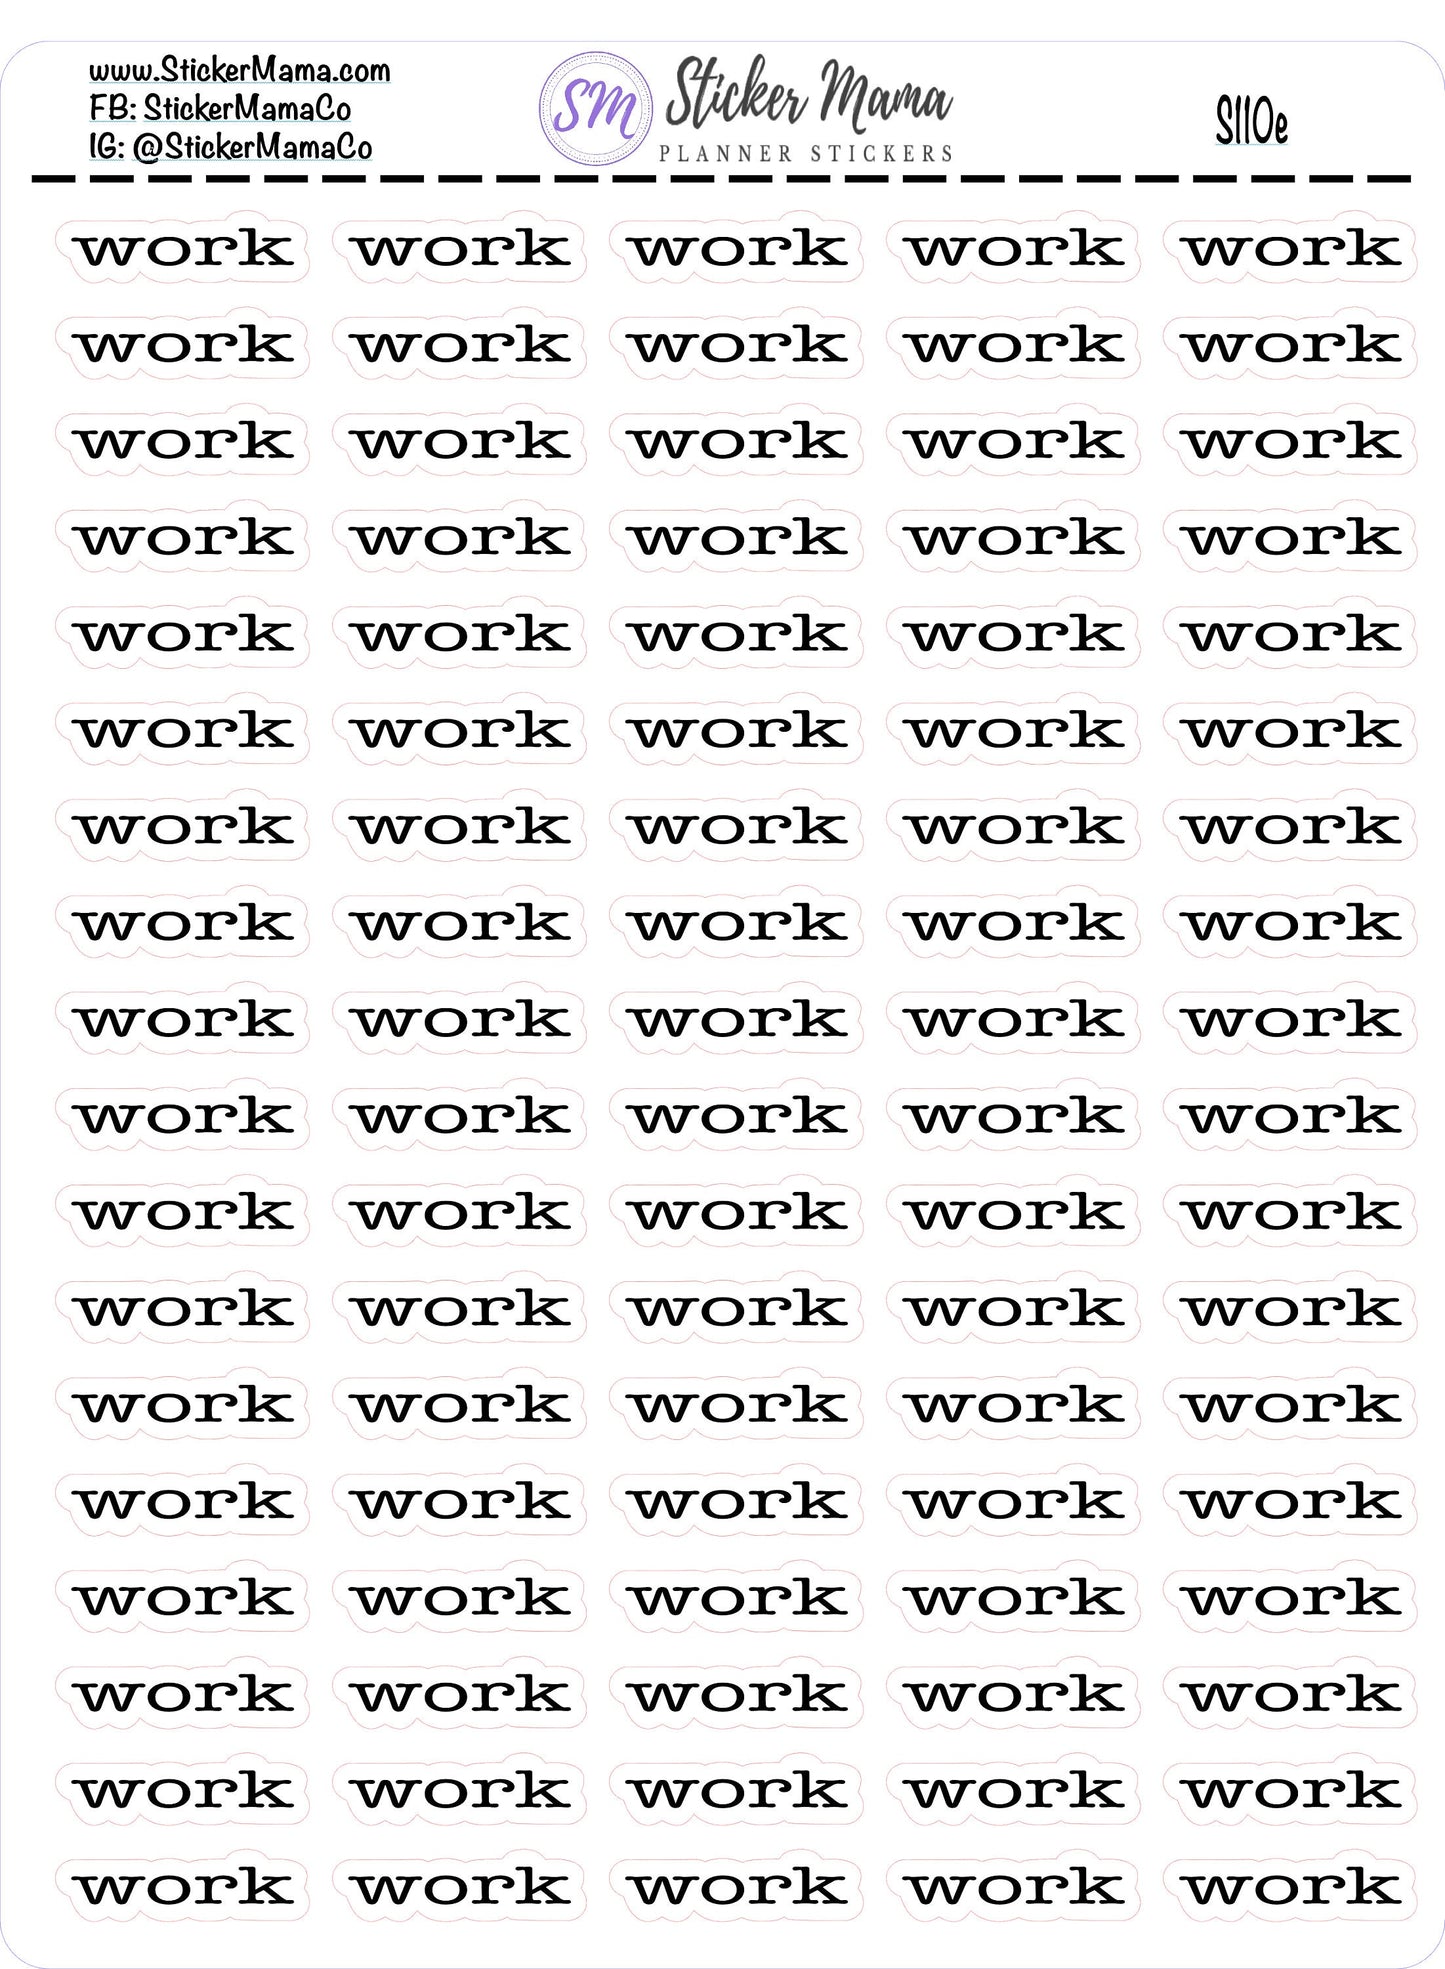 WORK SCRIPT PLANNER Stickers S110 JenPlans Script Font Planner Stickers For Work Planner Stickers Go to Work Sticker